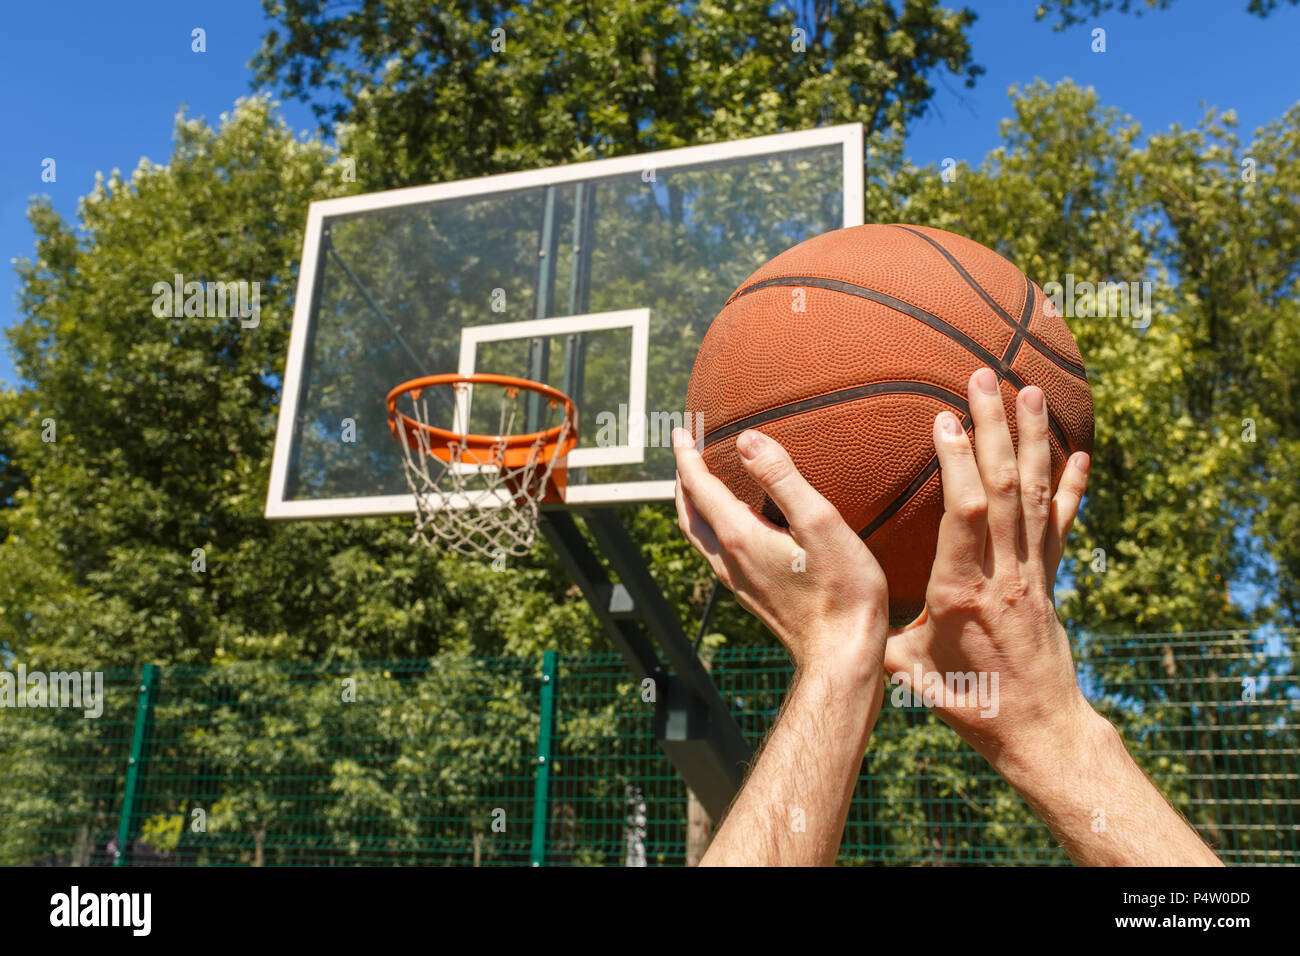 hands throwing basketball ball Stock Photo